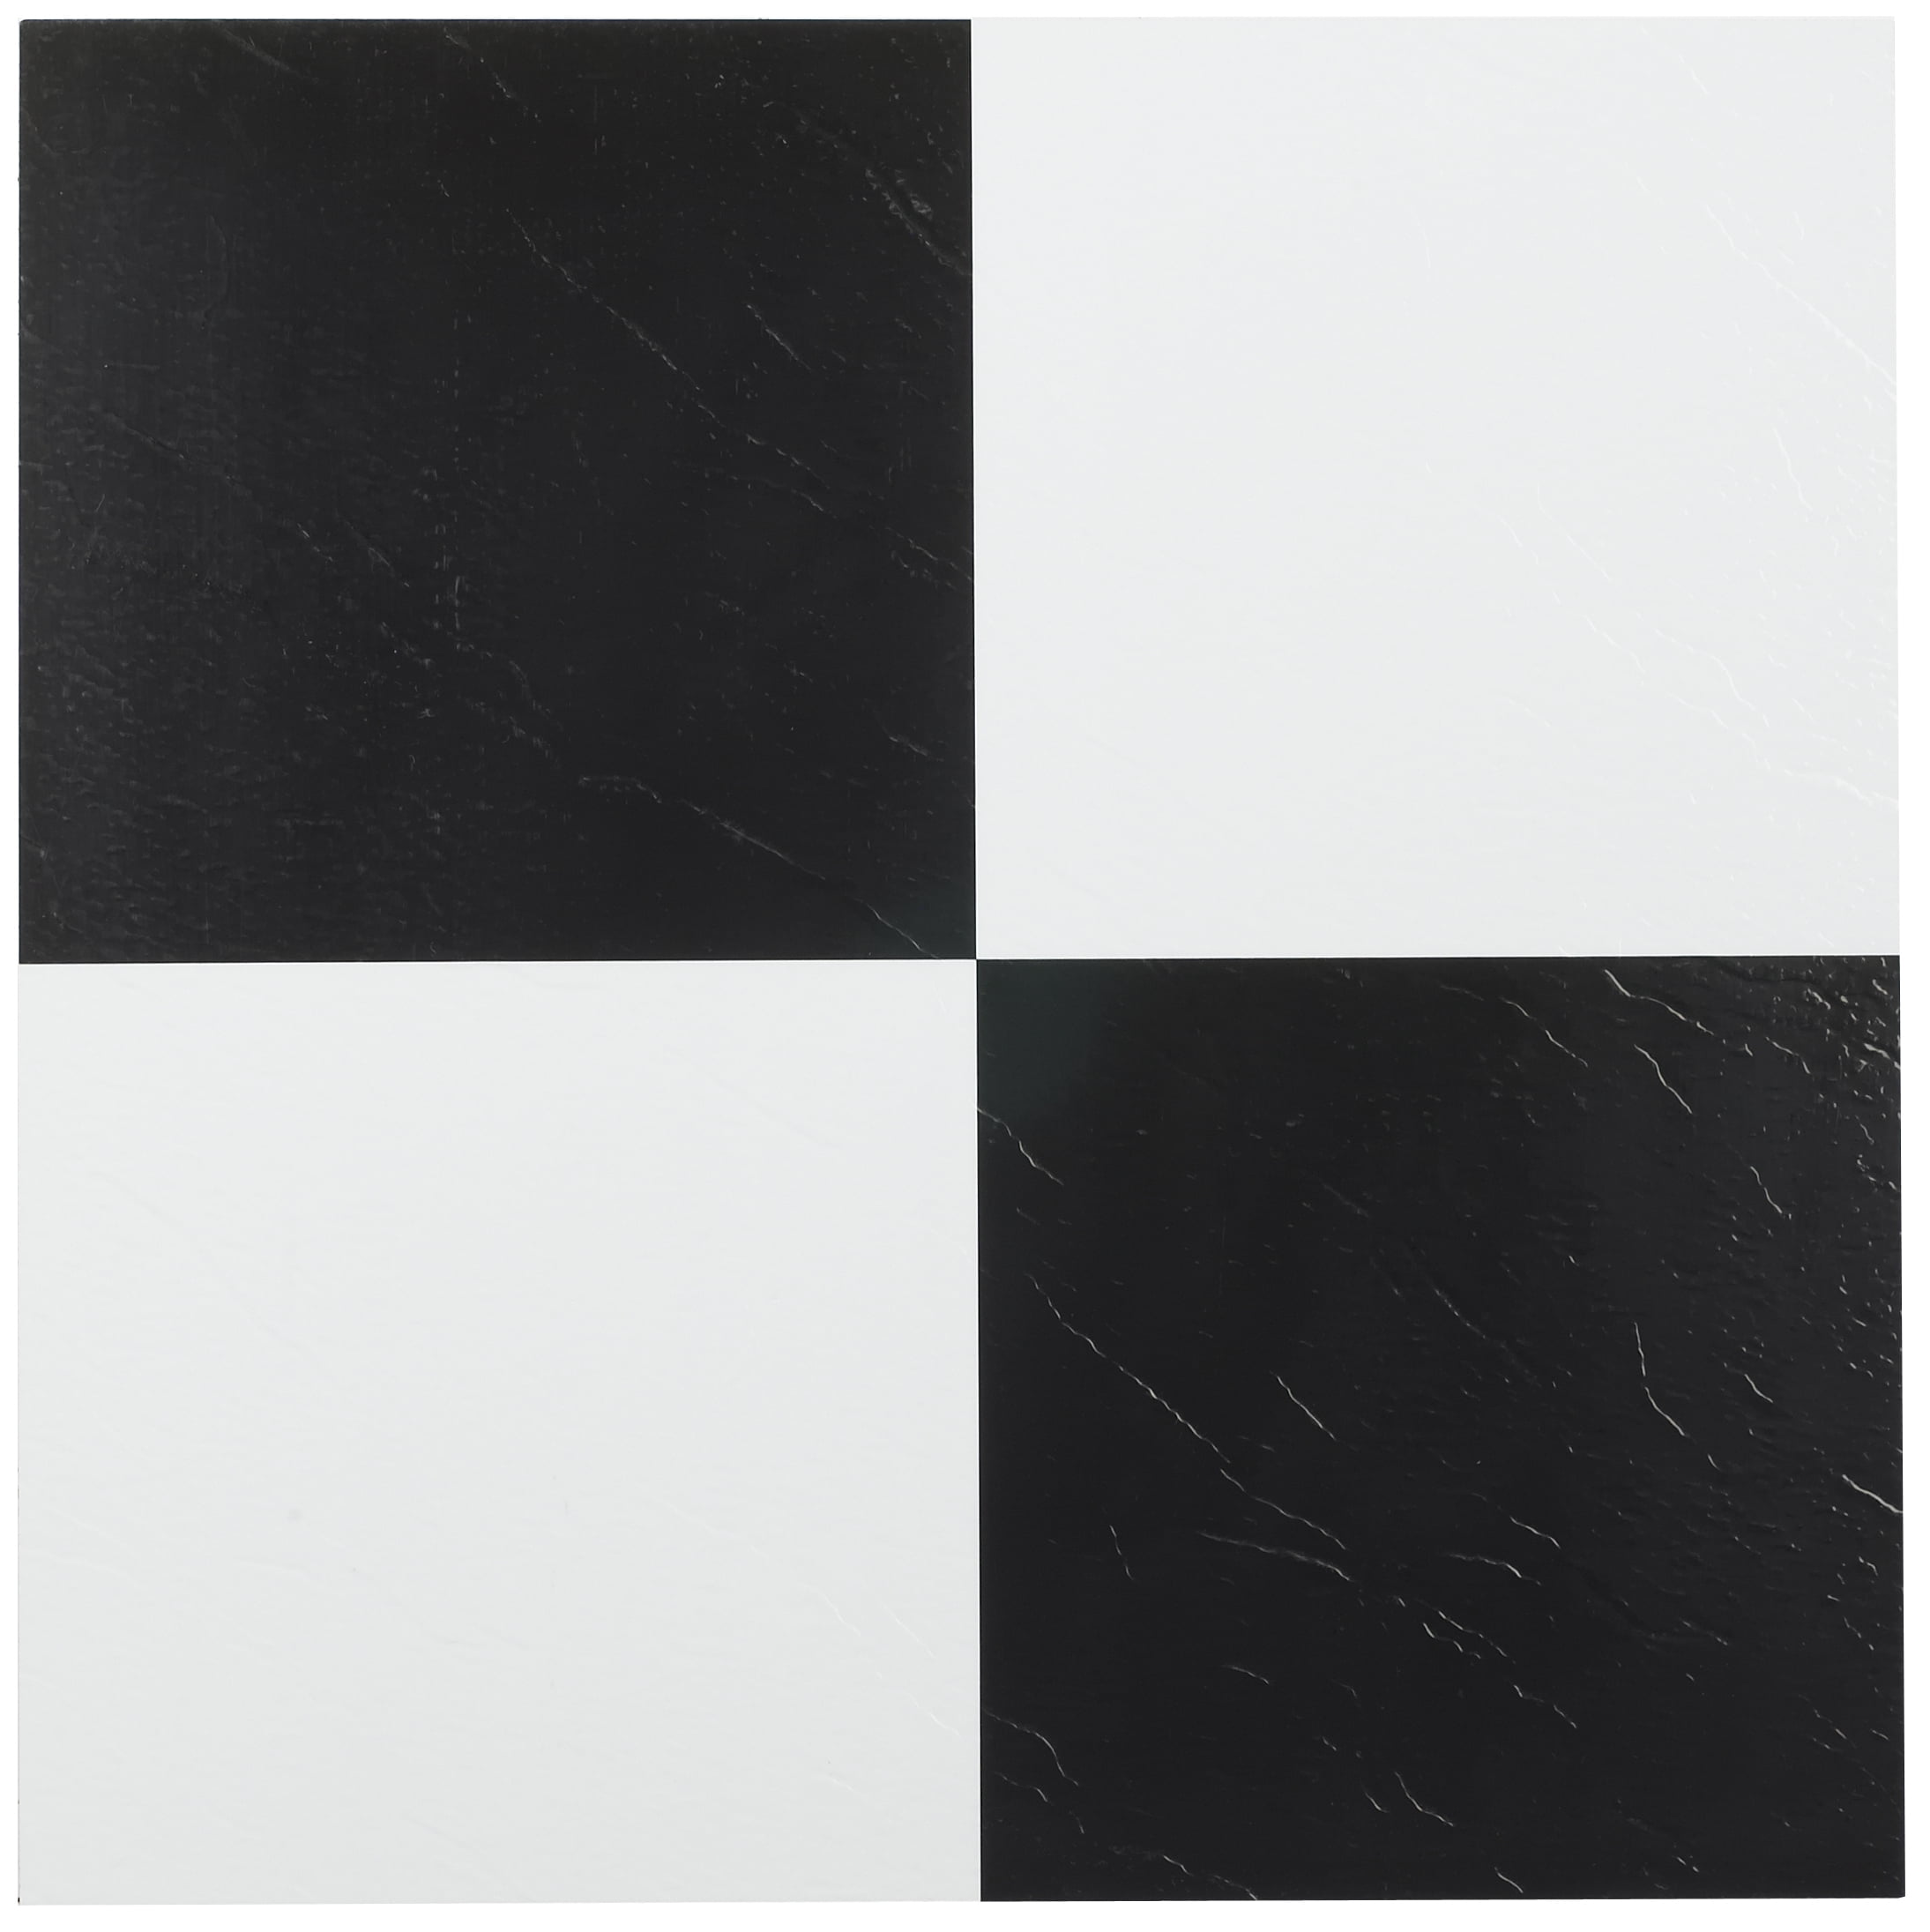 12 Inch Self Adhesive Vinyl Floor Tile, Black And White Vinyl Tile Flooring